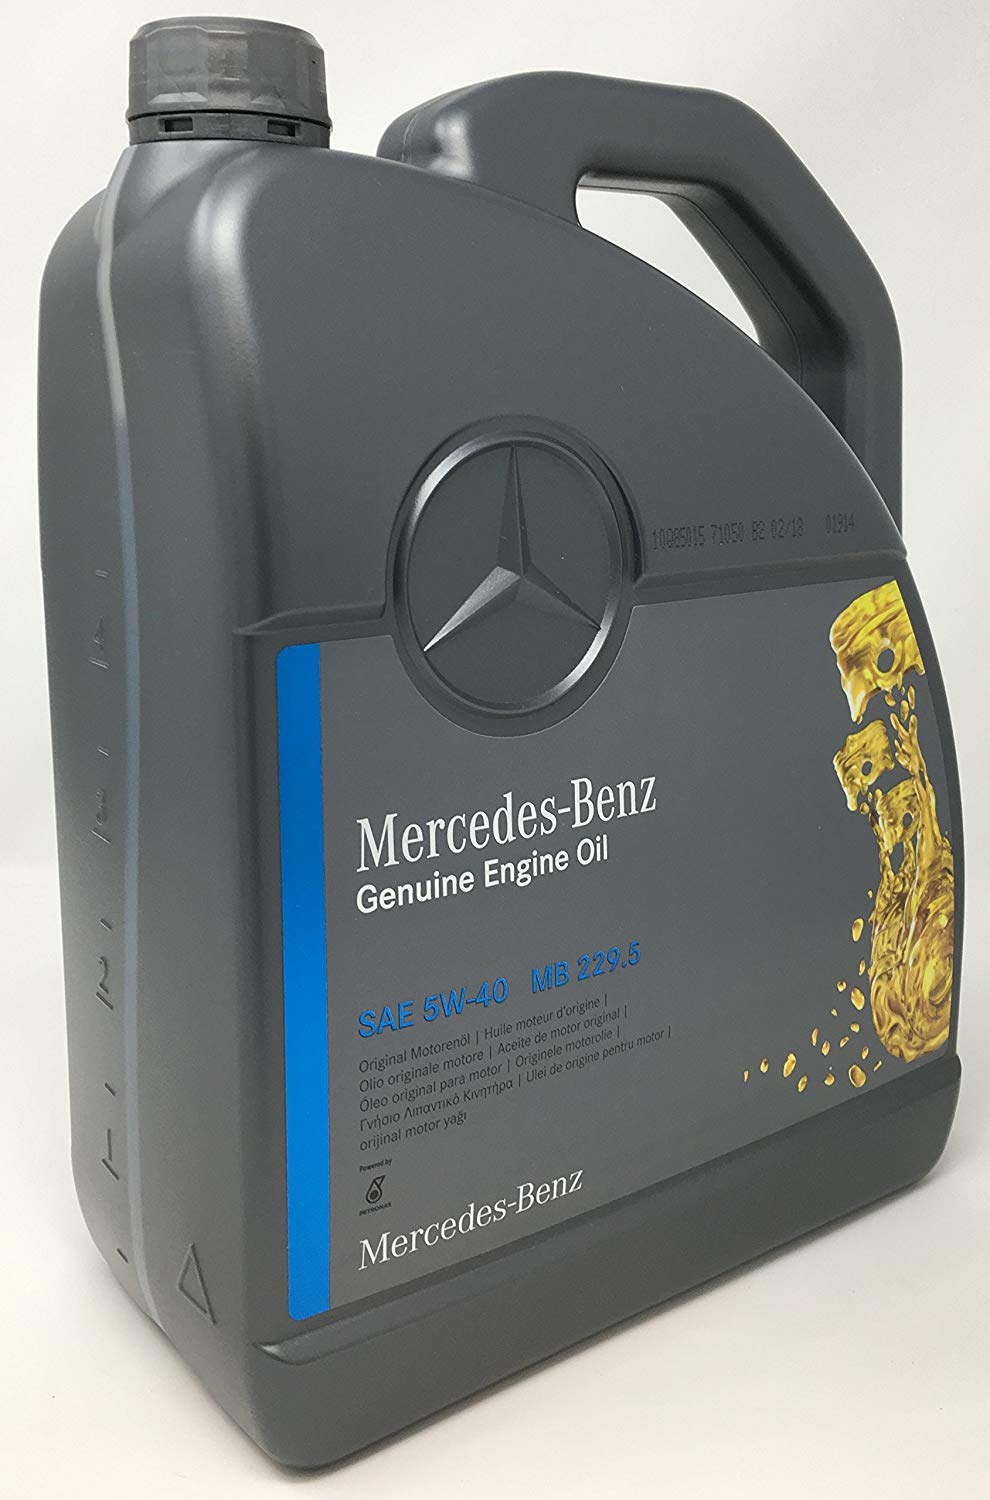 Mercedes Engine oil Mercedes MB 229.5 5W-40, 5L – price